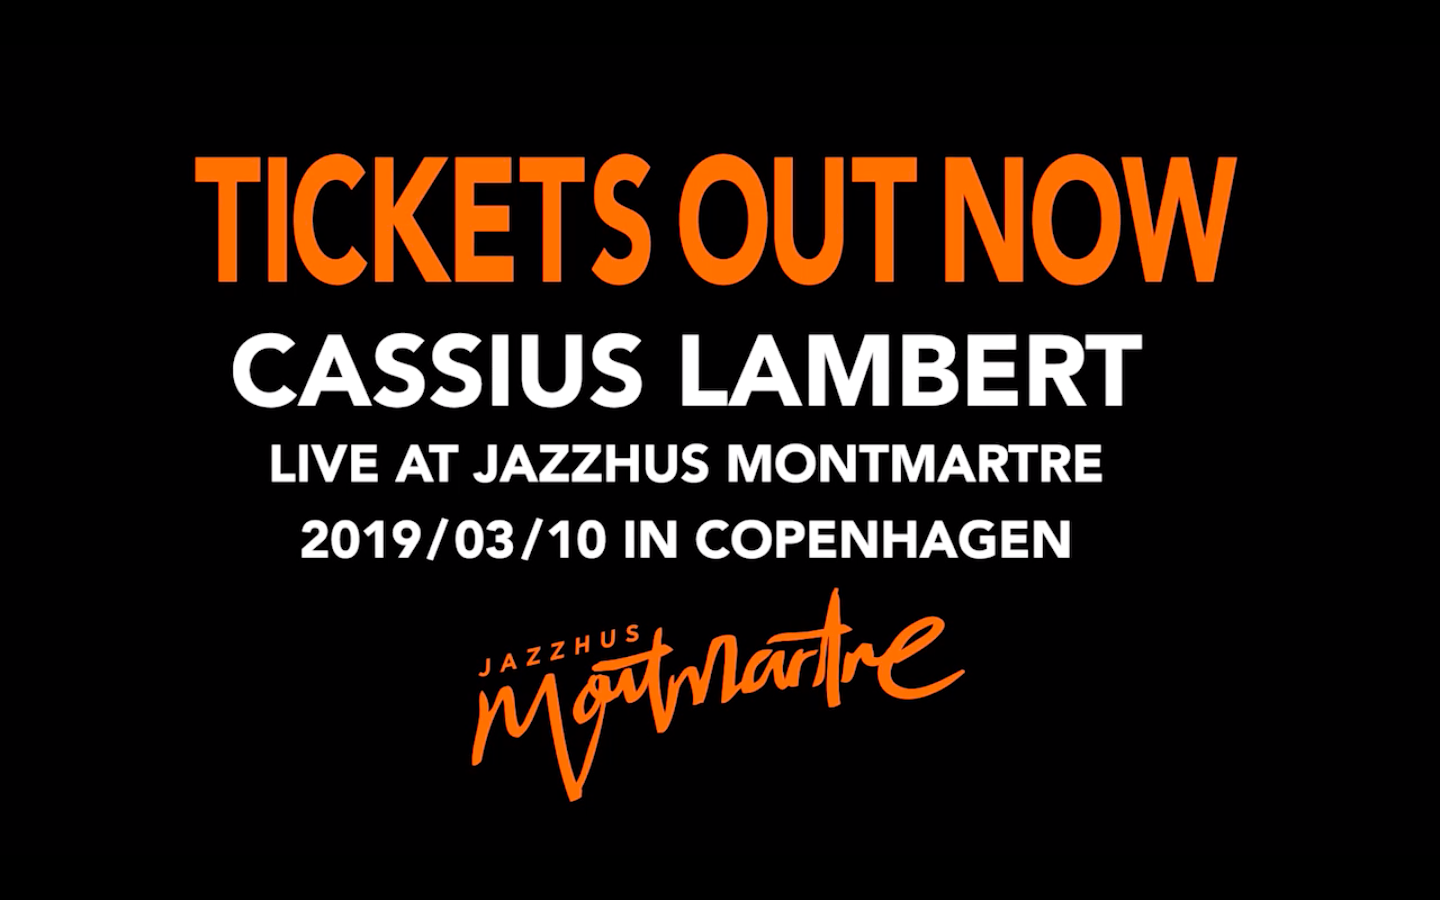 "Tickets out now" Cassius Lambert live at Jazzhus Montmatre, Copenhagen. 10th of March 2019